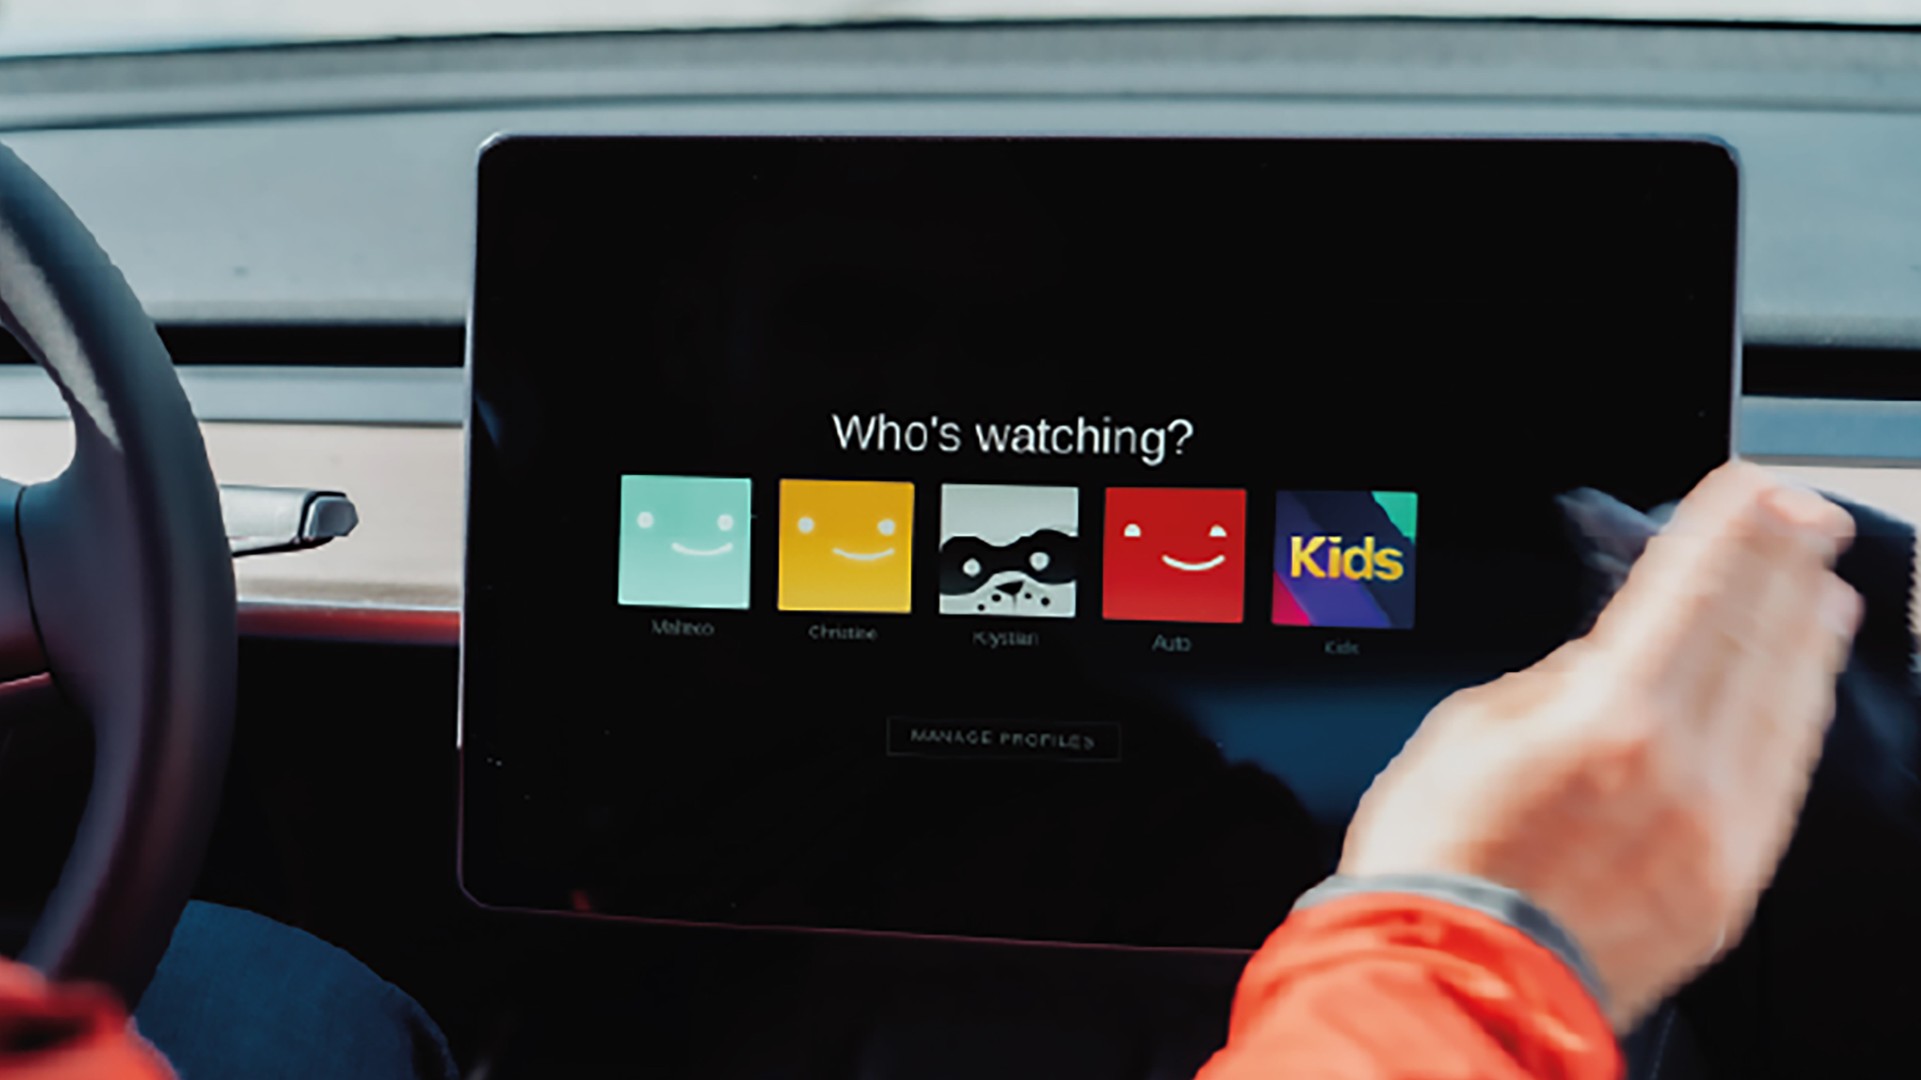 Netflix's "who is watching" screen